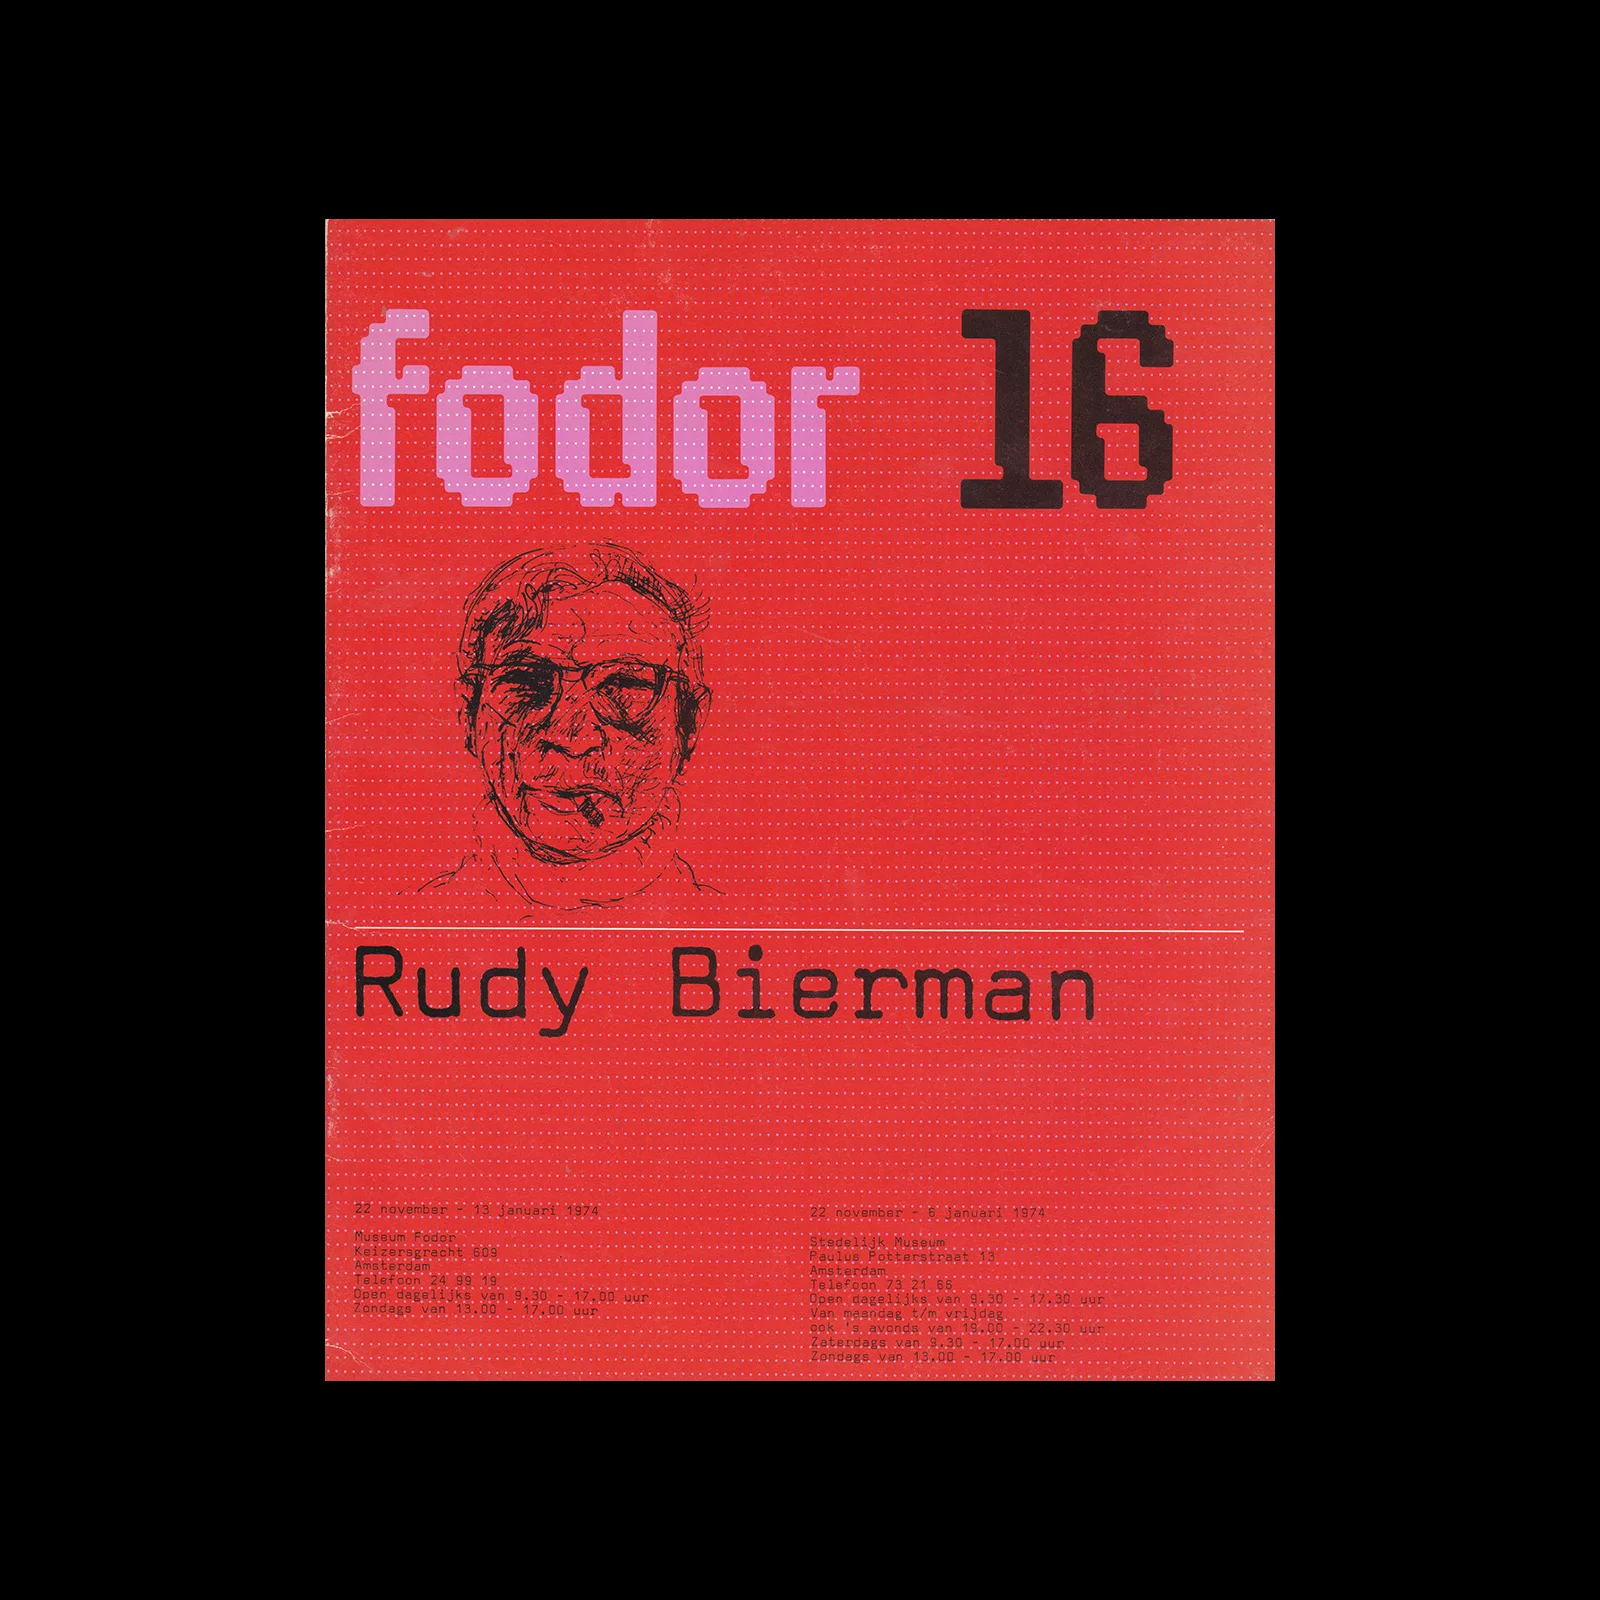 Fodor 16, 1974 - Rudy Bierman. Designed by Wim Crouwel and Daphne Duijvelshoff (Total Design).